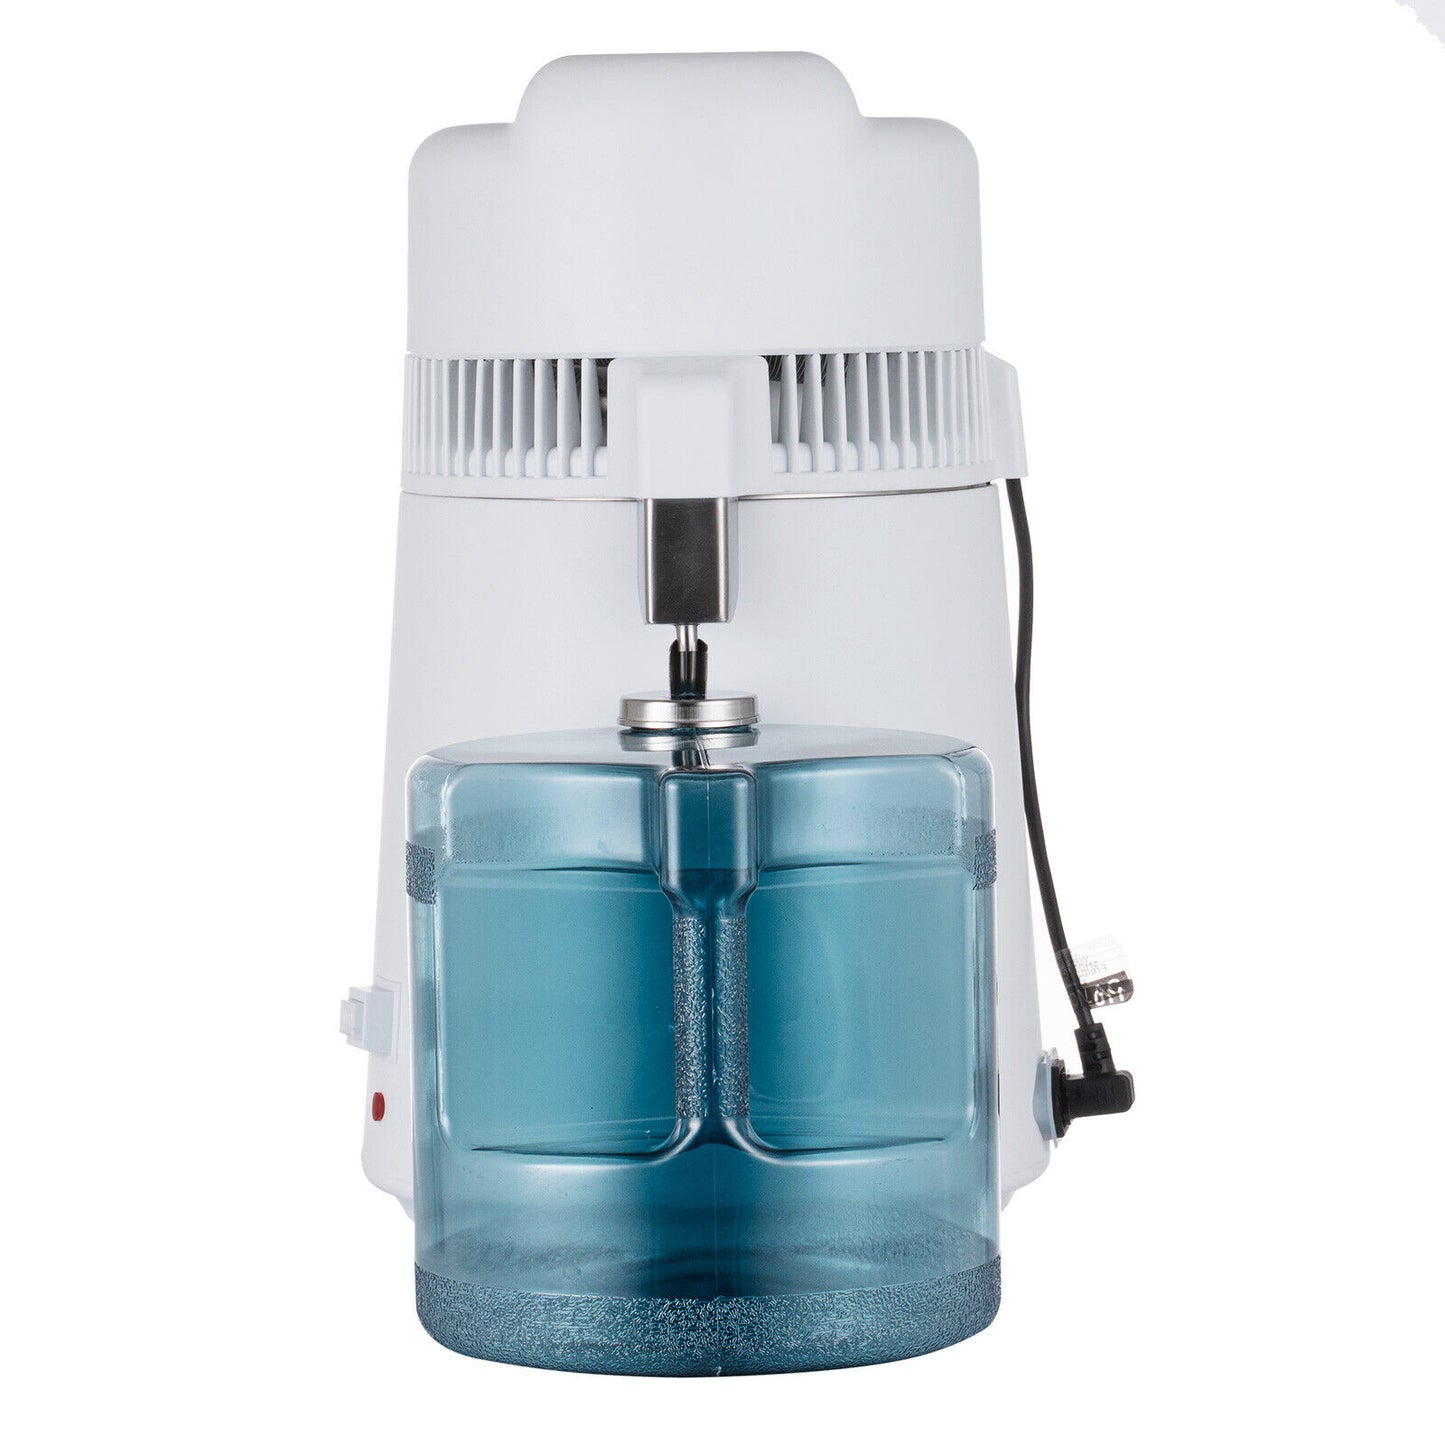 6L Water Distiller Home Distilled Water Maker Countertop Purifier Machine